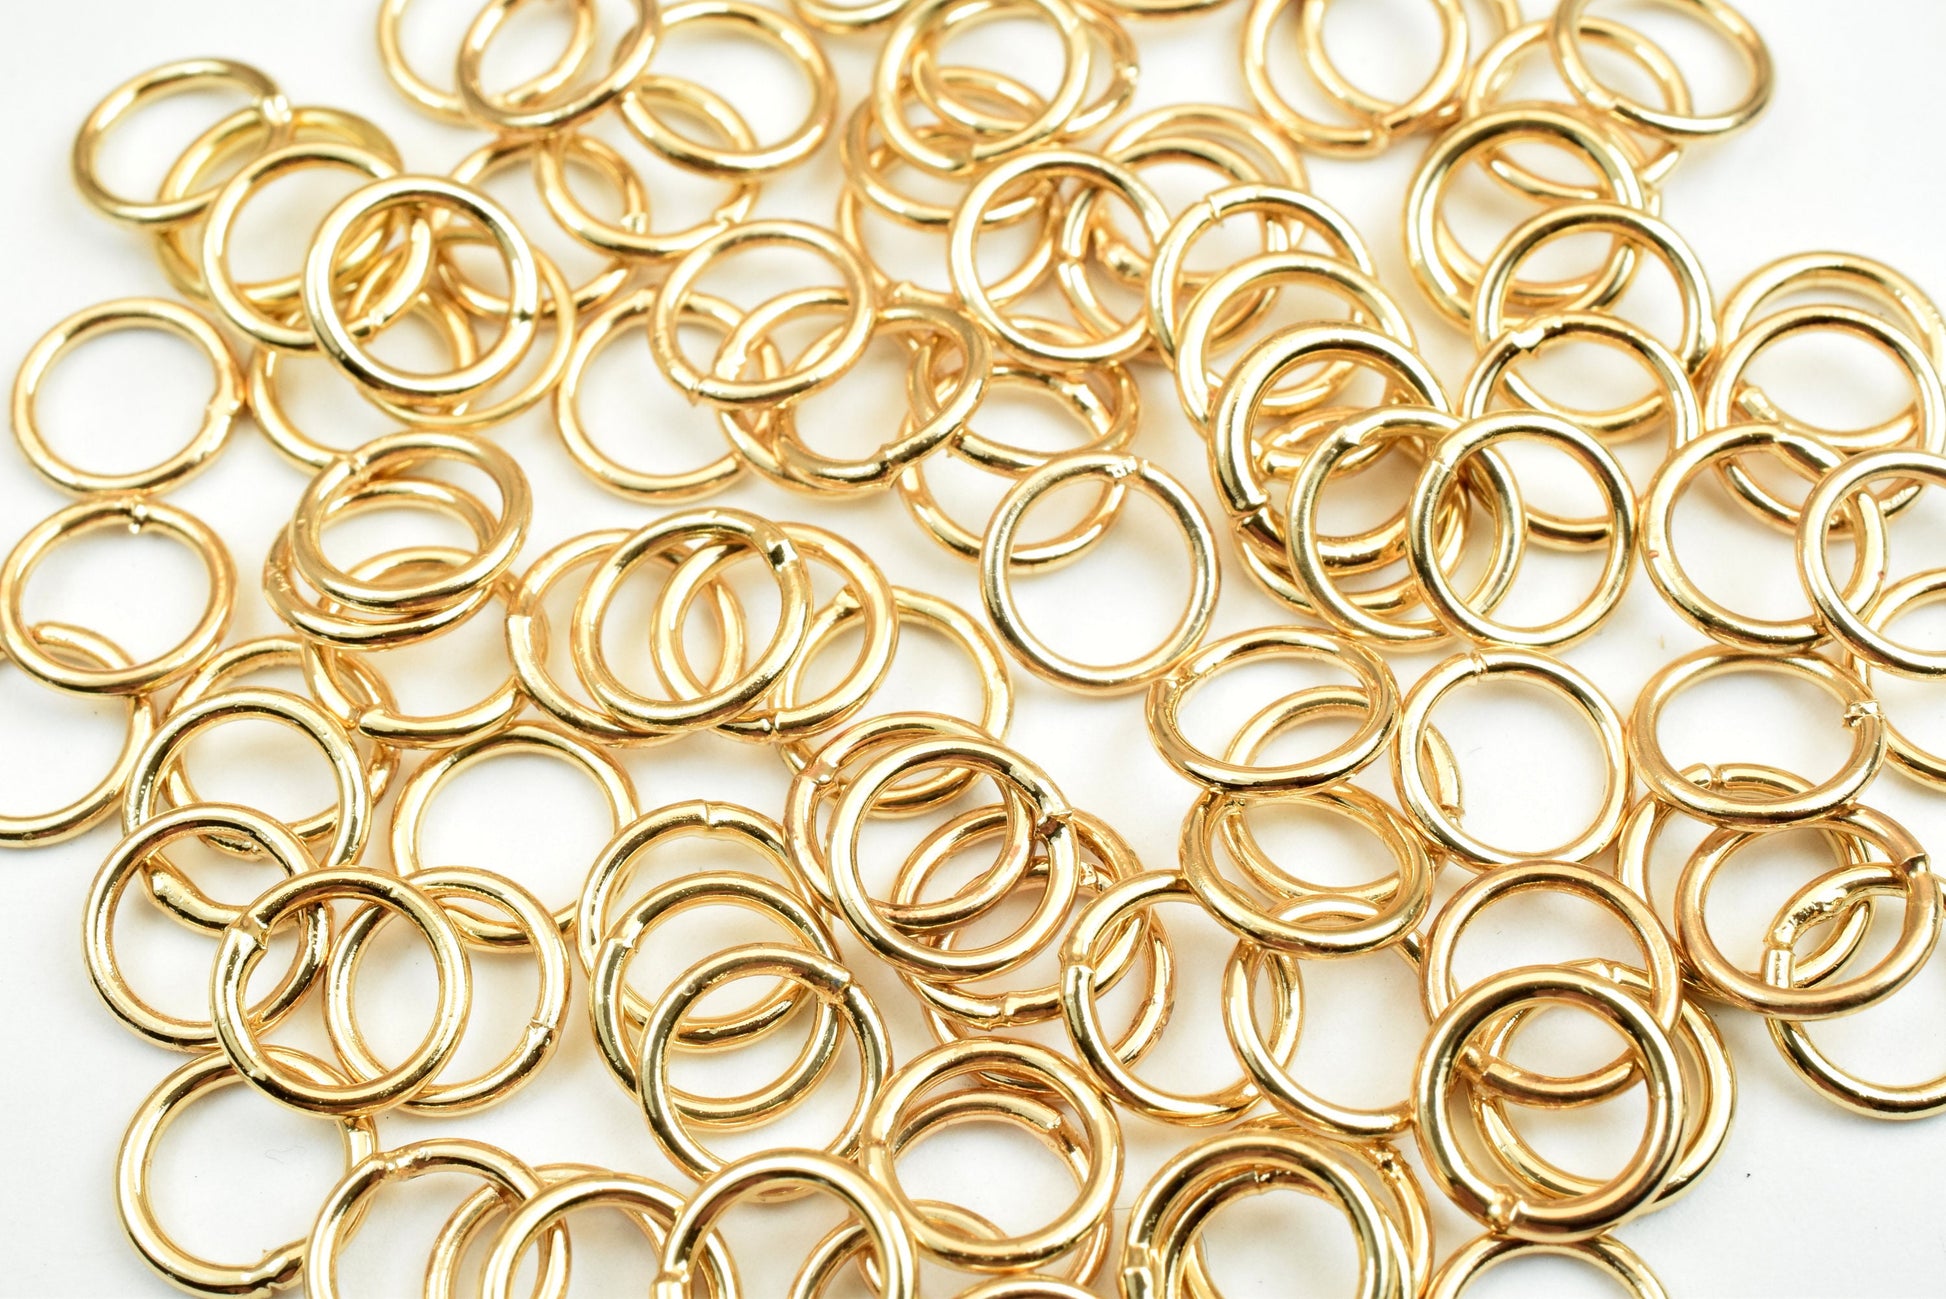 18K Gold Filled Jump Rings Beads, Seamless, Various Sizes, 2mm, 3mm, 4mm, 5mm, 6mm,  8mm, 10mm, 12mm  Spacer Findings Jewelry USA - BeadsFindingDepot